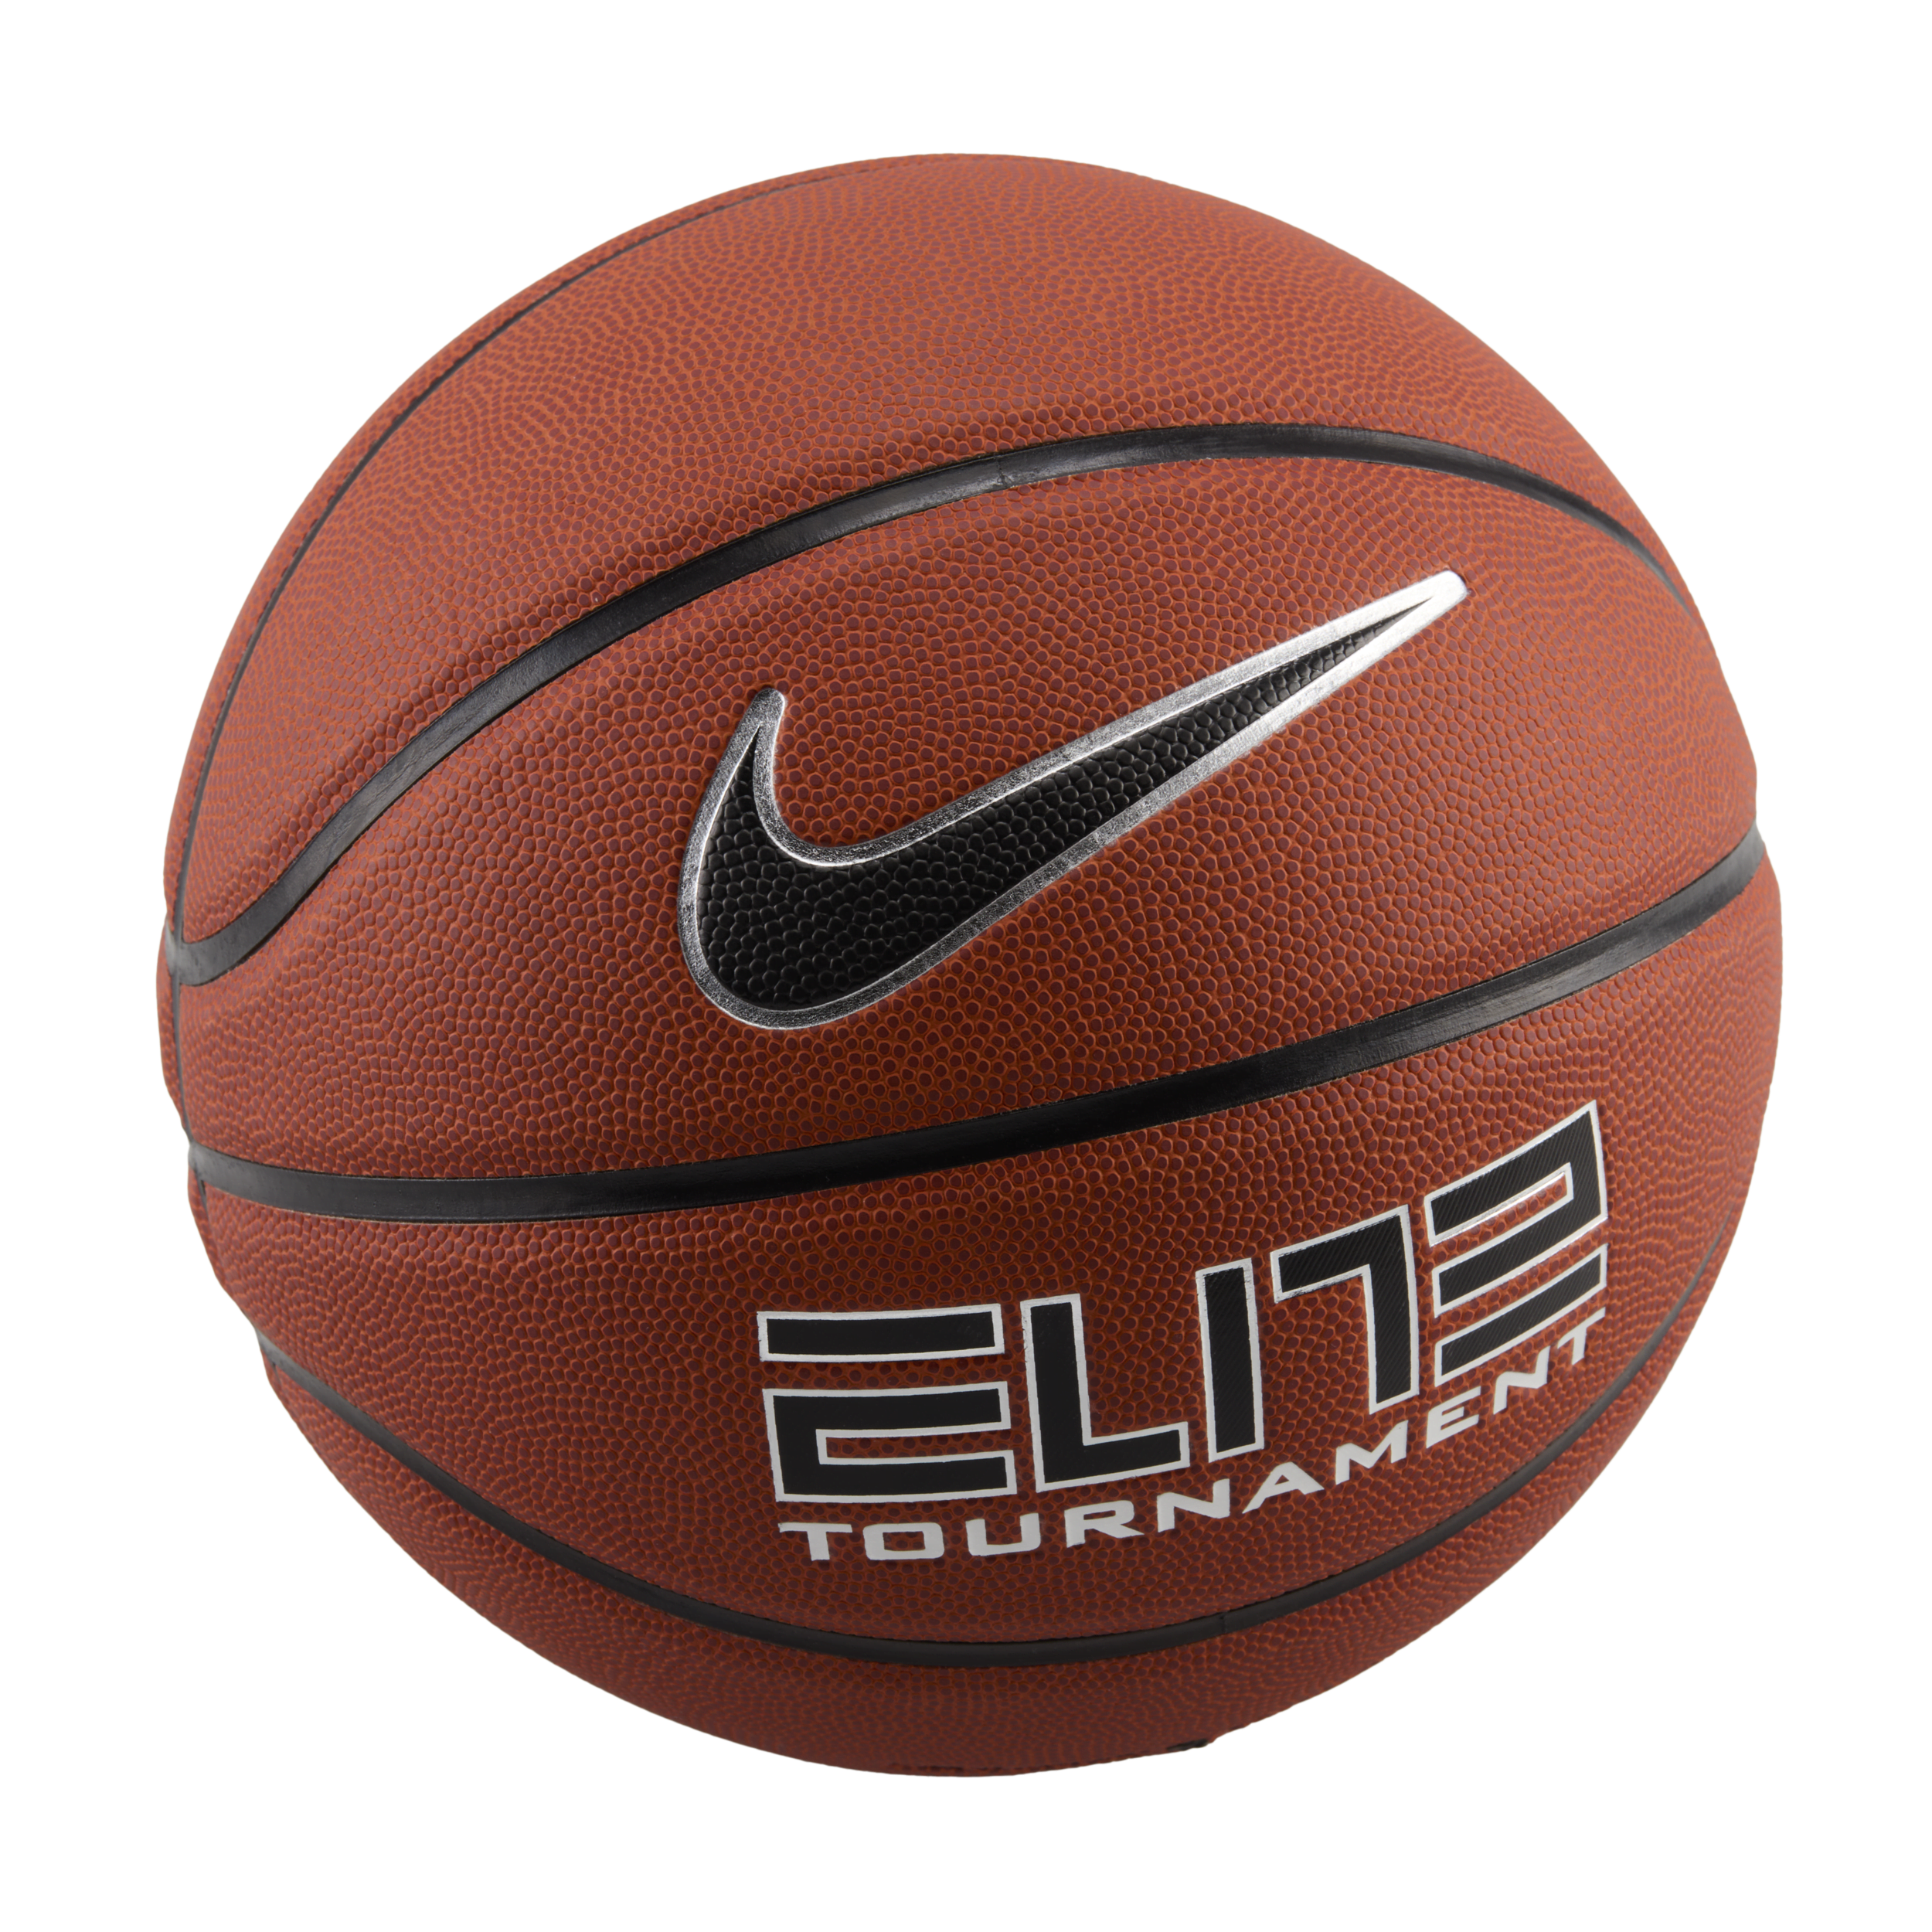 Nike Elite Tournament 8-Panel basketbal (zonder lucht) Oranje